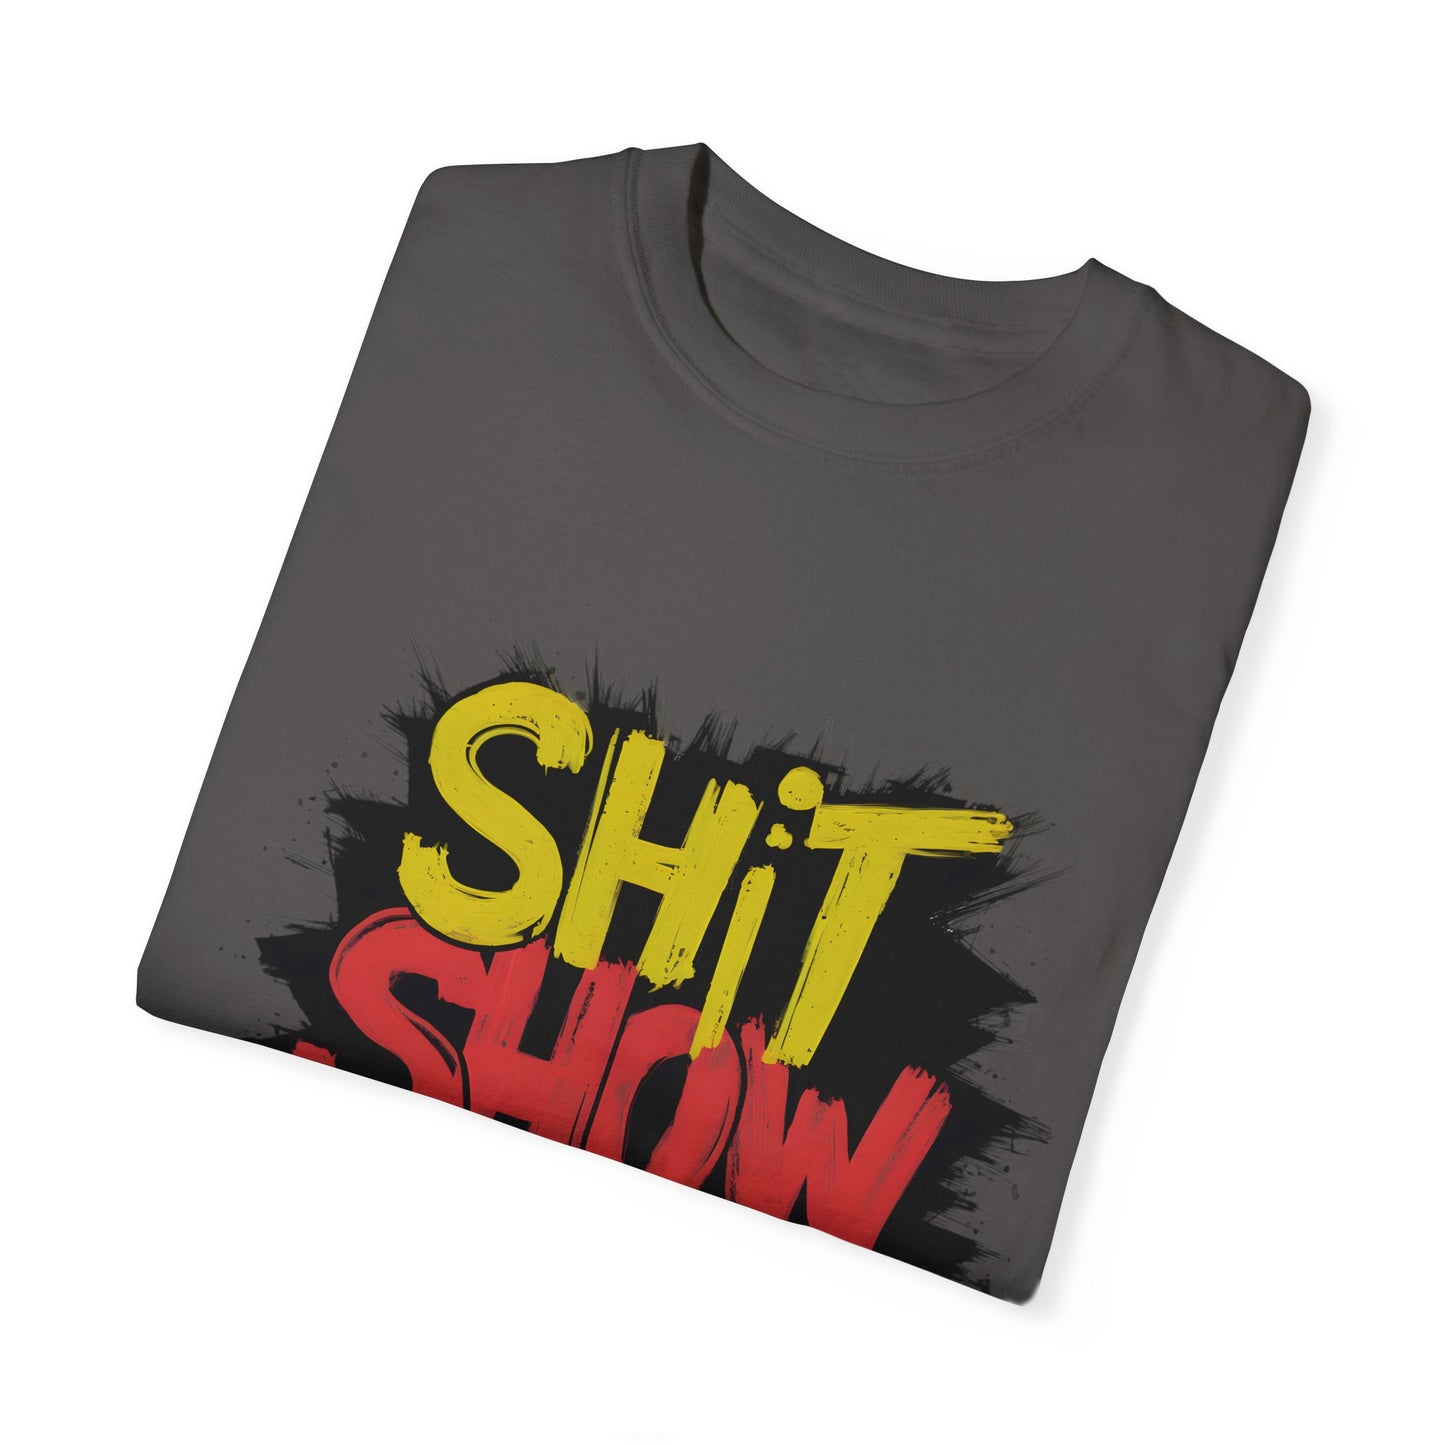 Shit Show Supervisor Urban Sarcastic Graphic Unisex Garment Dyed T-shirt Cotton Funny Humorous Graphic Soft Premium Unisex Men Women Graphite T-shirt Birthday Gift-38